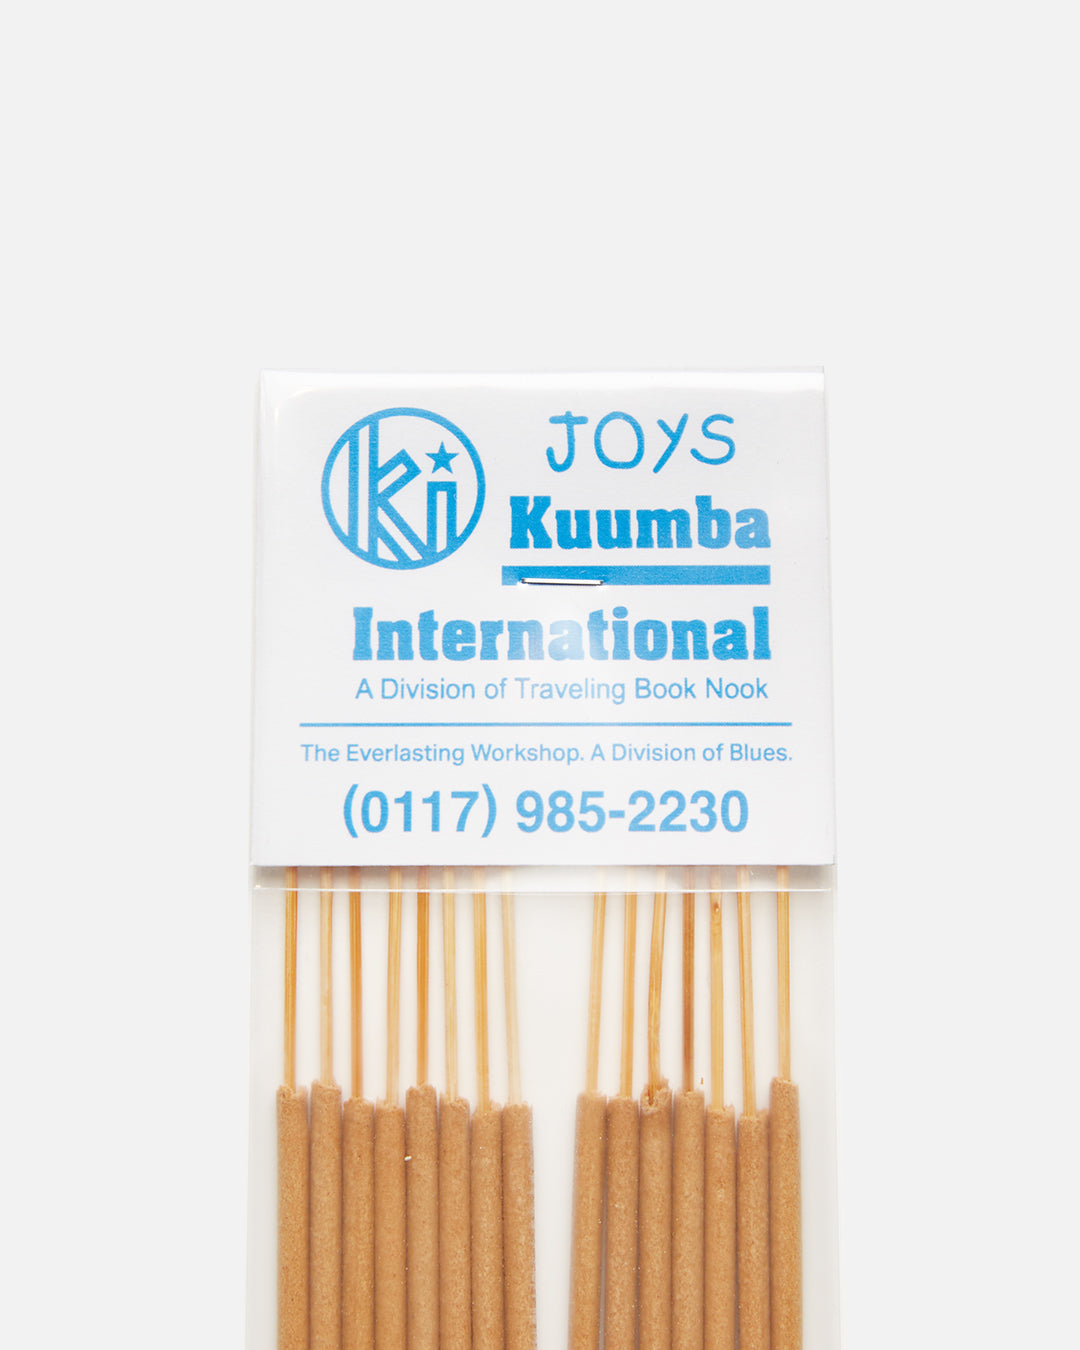 JOYS + Kuumba International Regular Incense blues store www.bluesstore.co